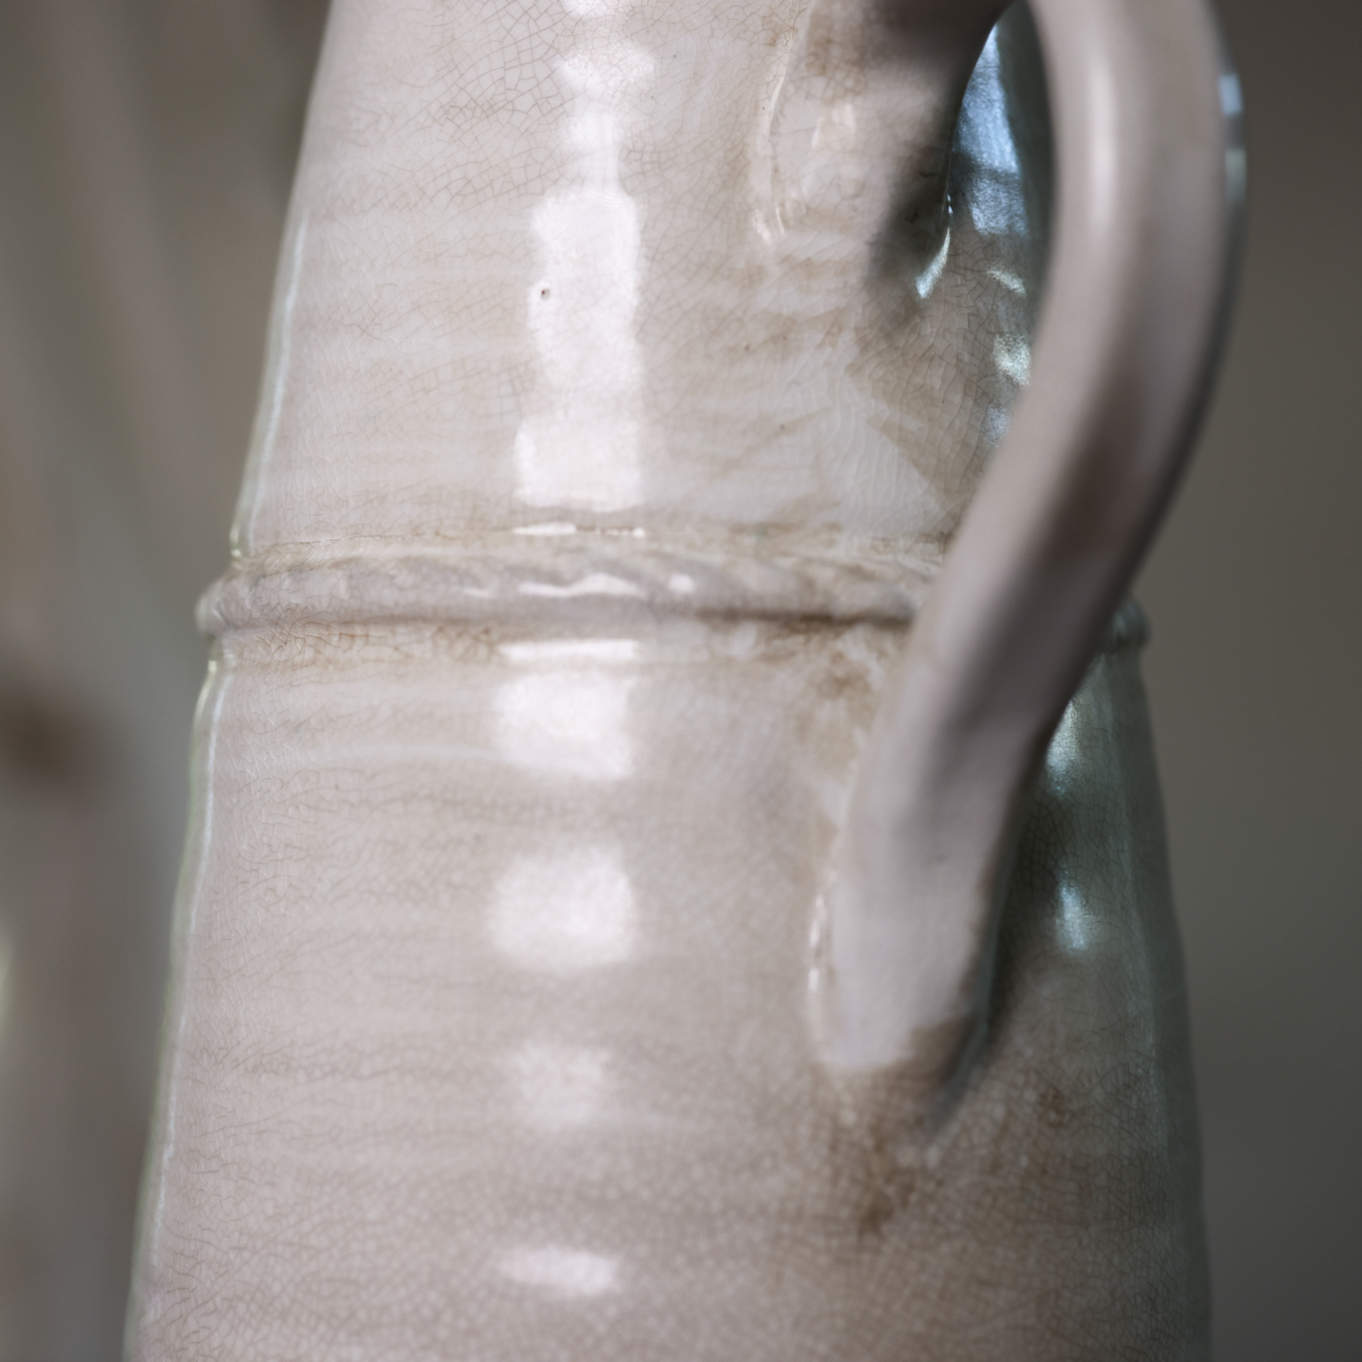 Close up of handle on cream vintage jug texture.